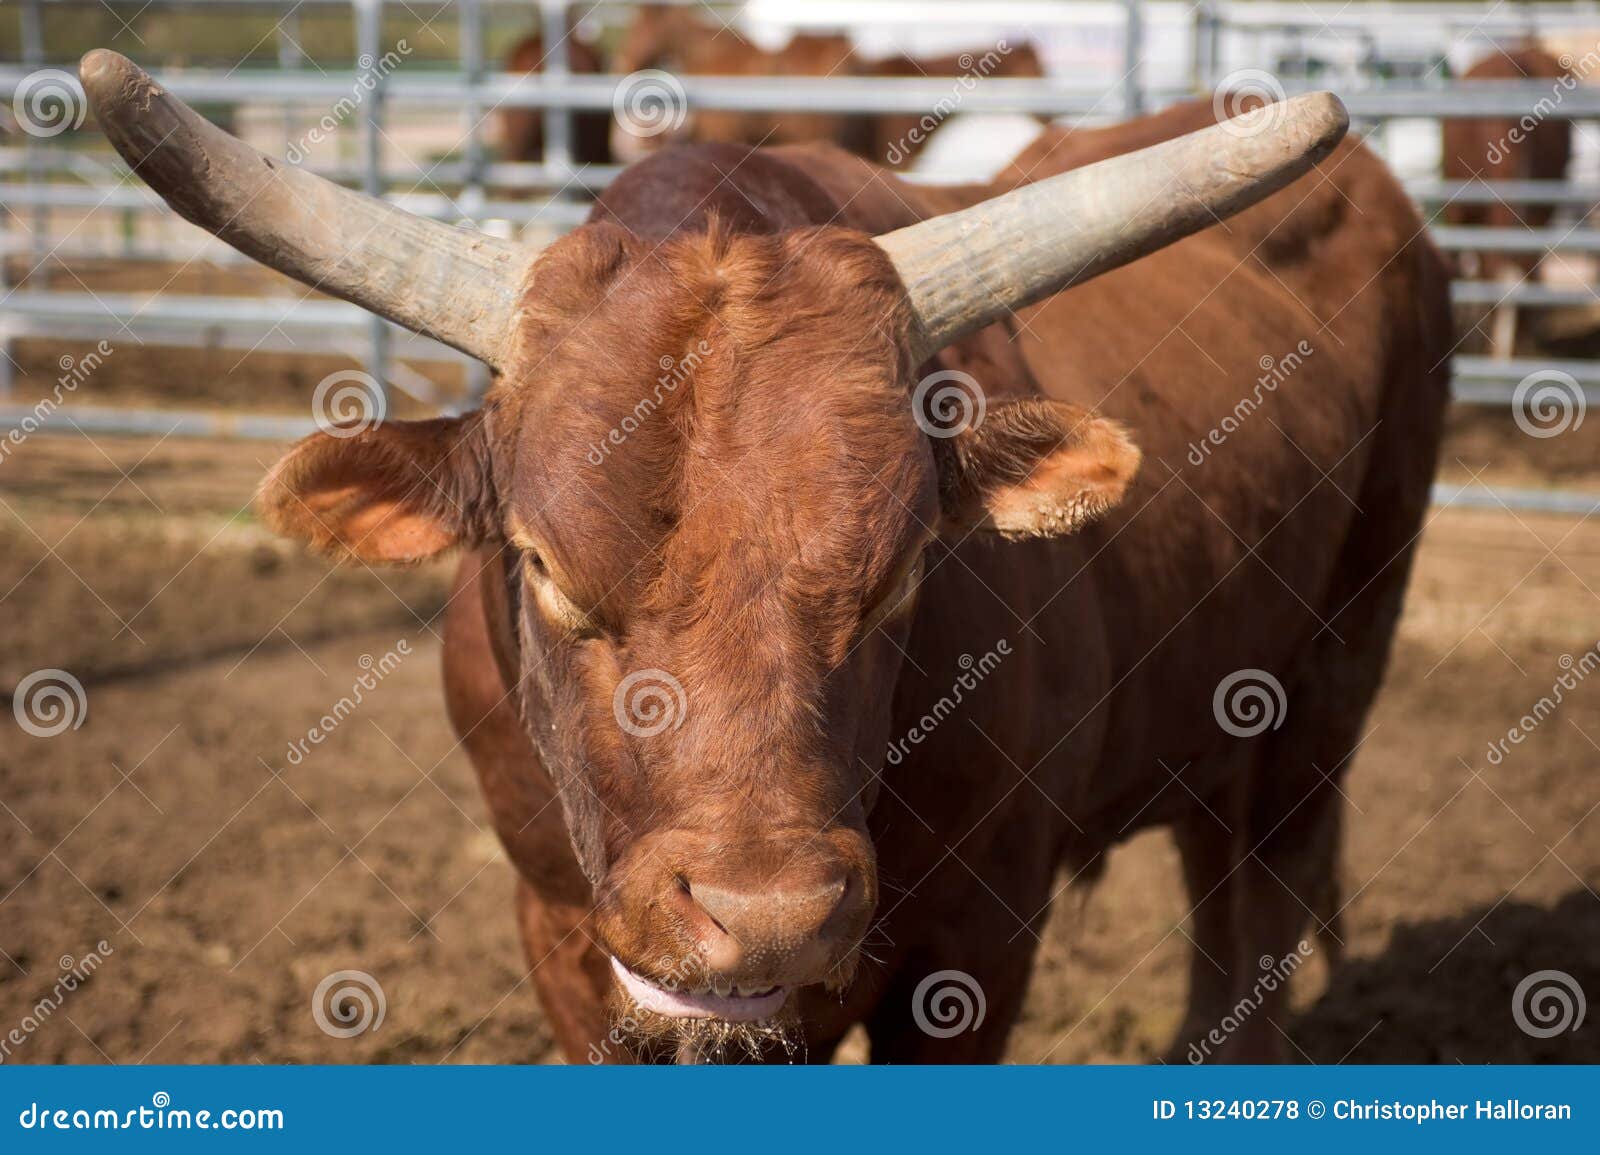 rodeo bull